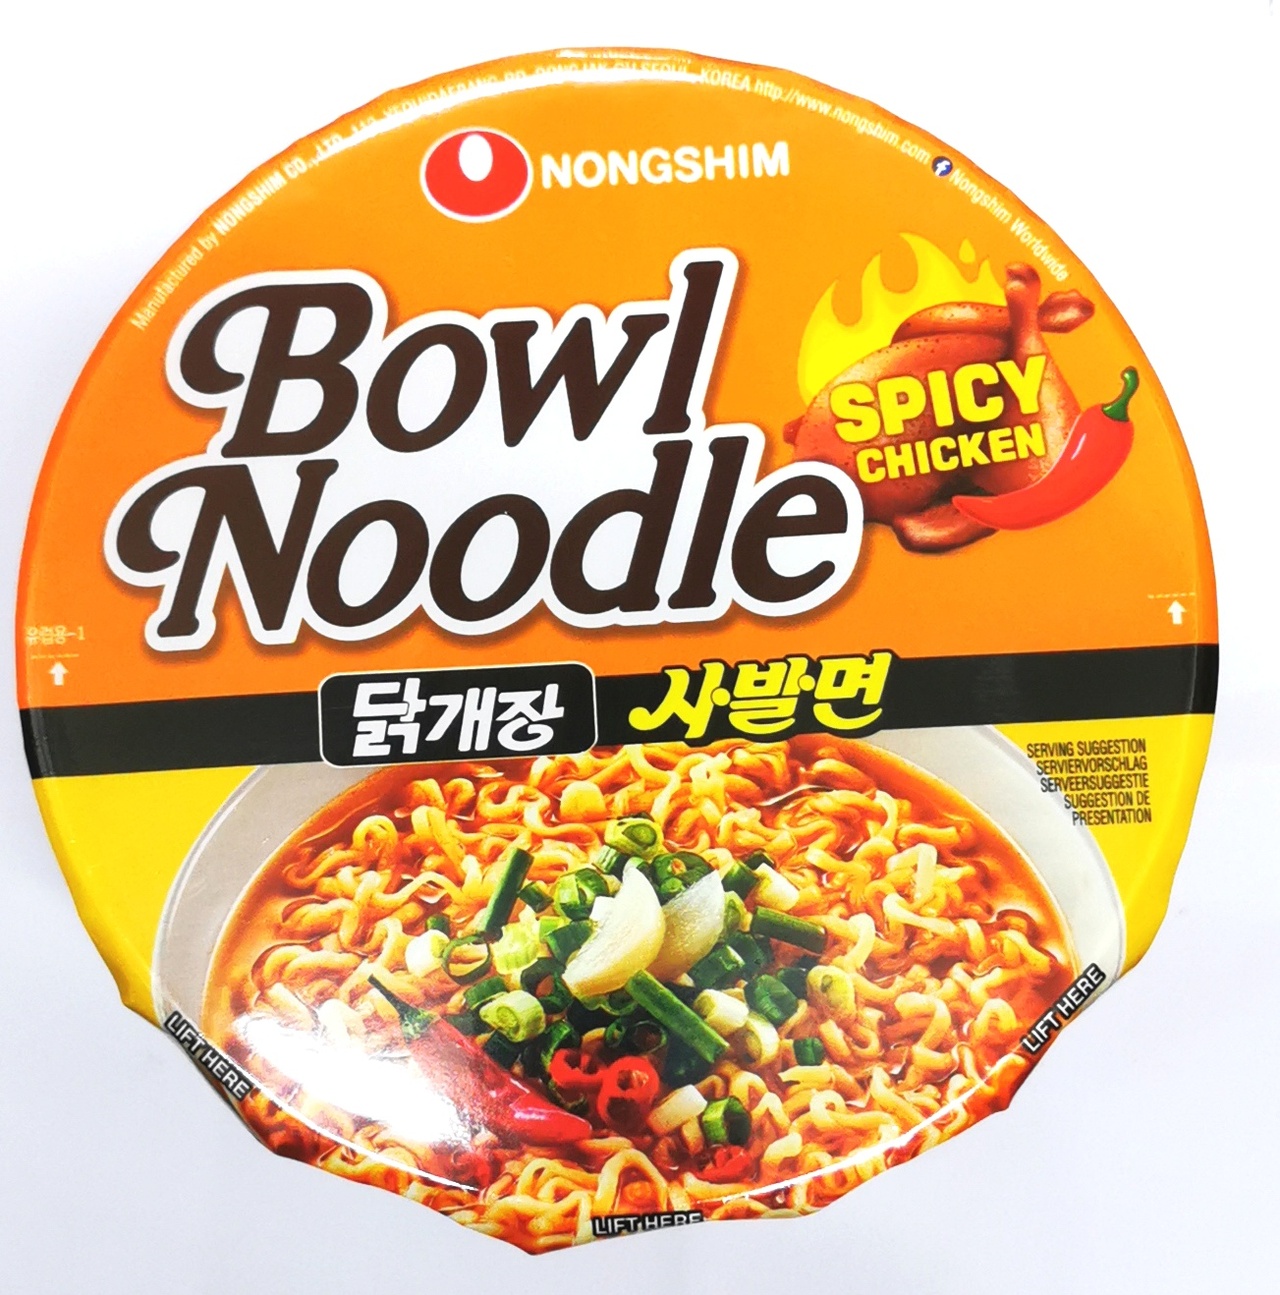 Nongshim Big Bowl Noodle (Spicy Chicken) 100g